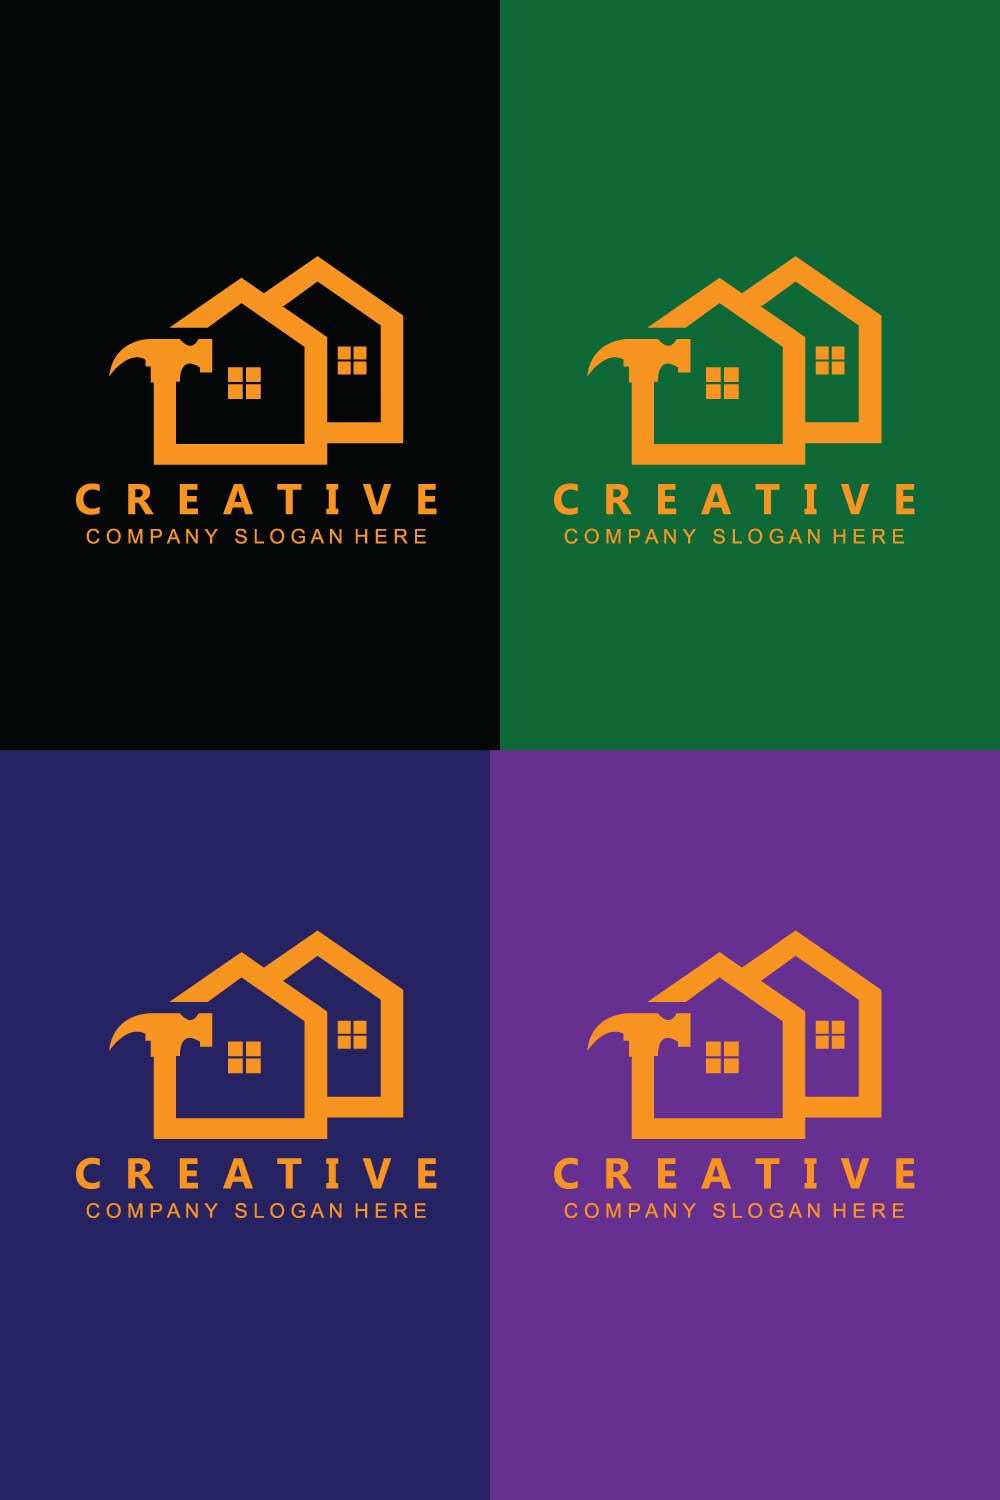 Real estate logo design pinterest preview image.